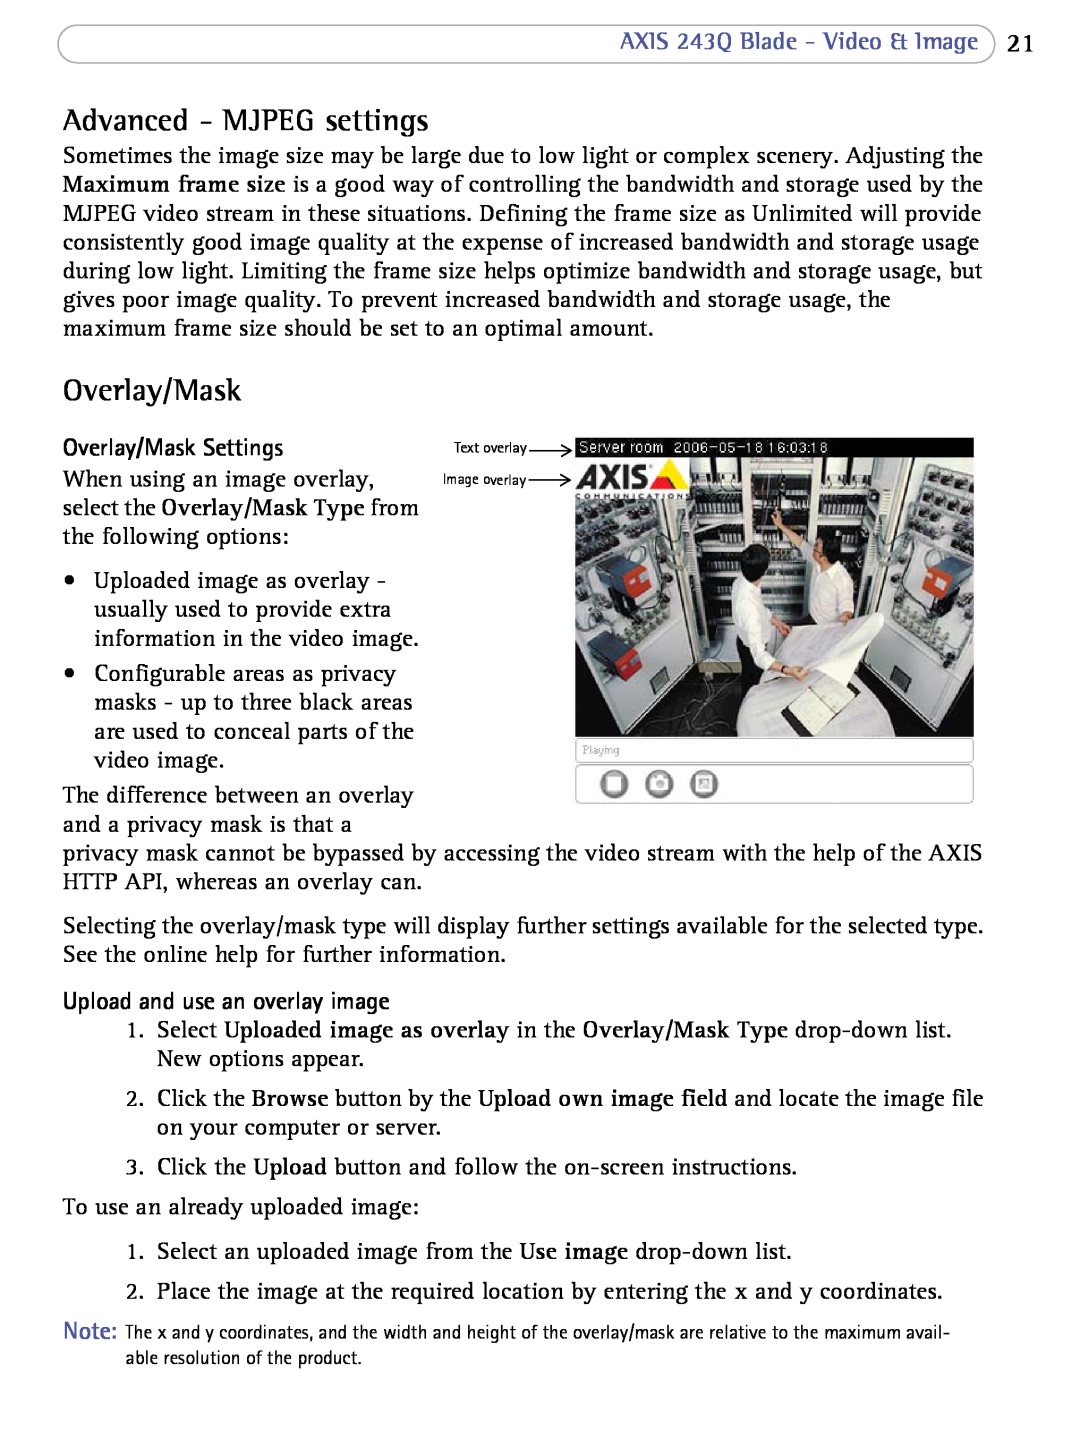 Axis Communications user manual Advanced - MJPEG settings, AXIS 243Q Blade - Video & Image, Overlay/Mask Settings 